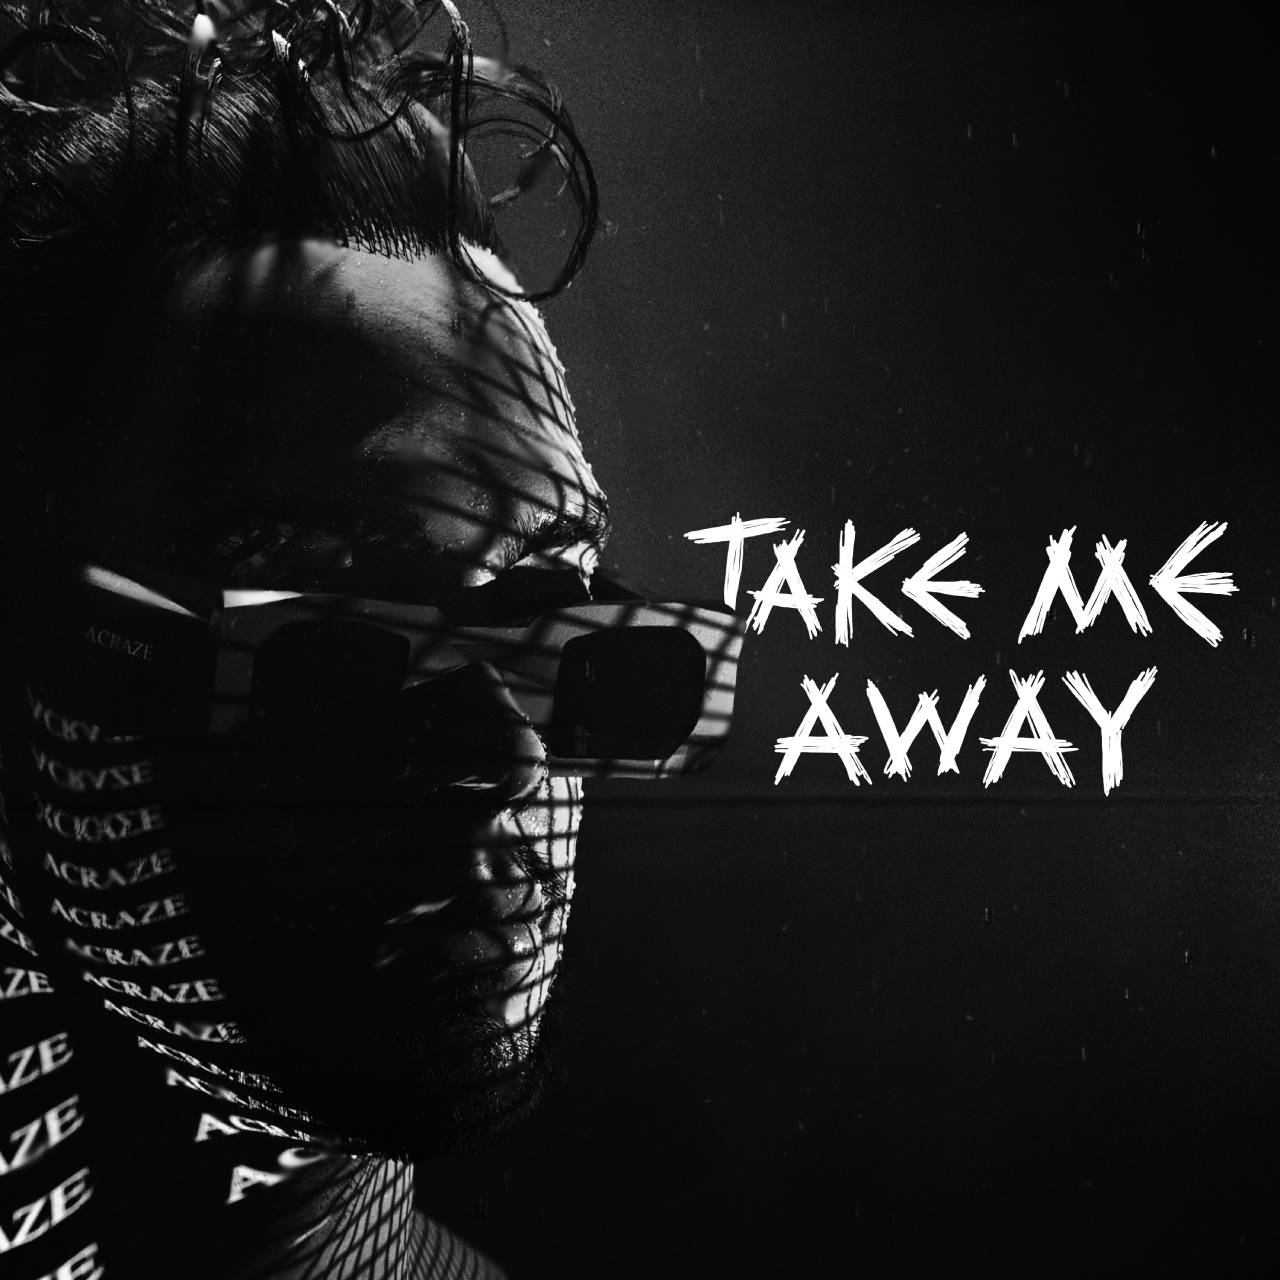 Acraze - Take me away